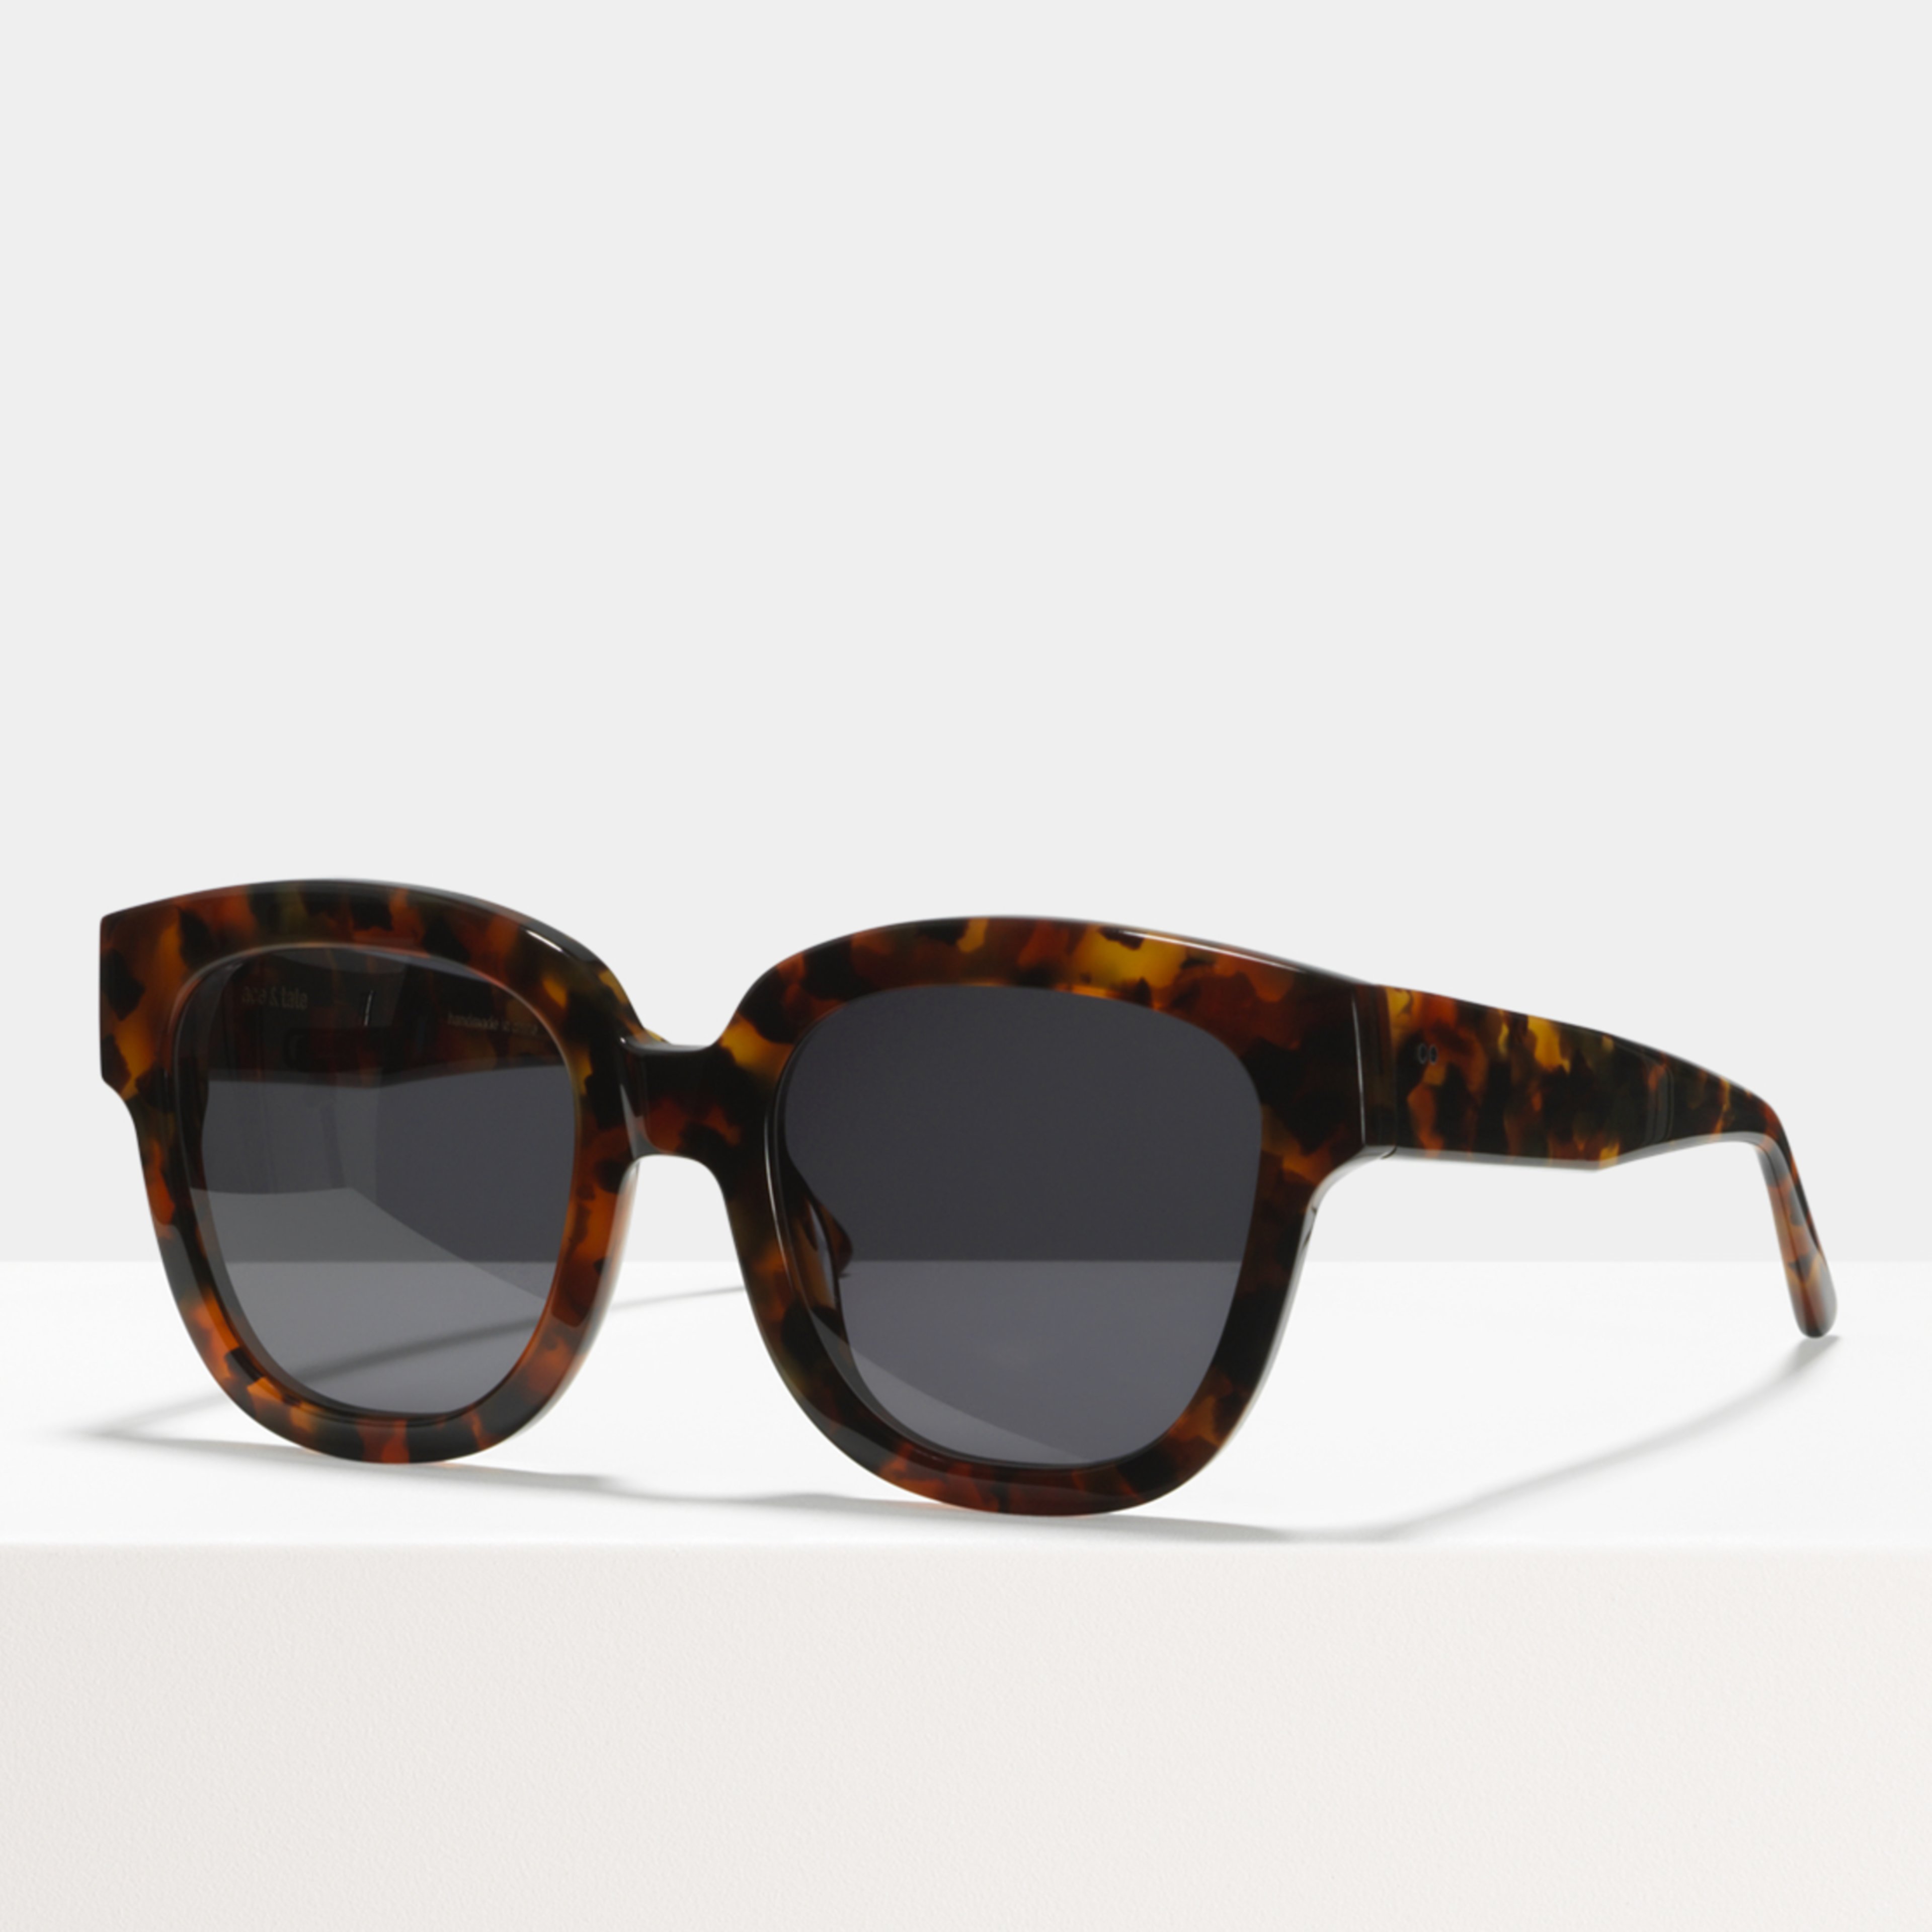 Ace & Tate Sonnenbrillen | quadratisch Acetat in Braun, Orange